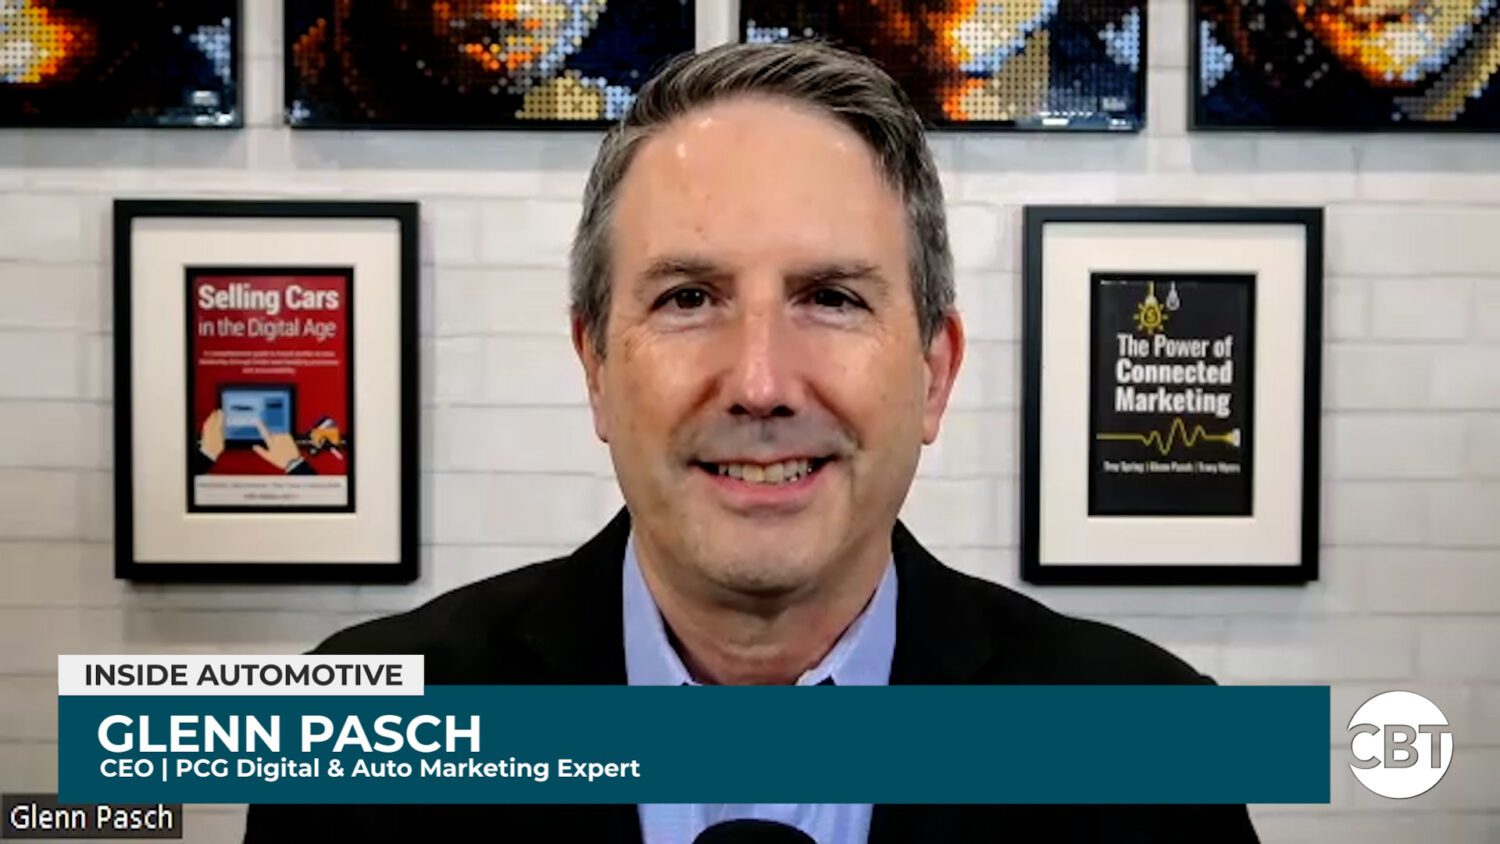 Glenn Pasch shares automotive marketing insights for modern retailing